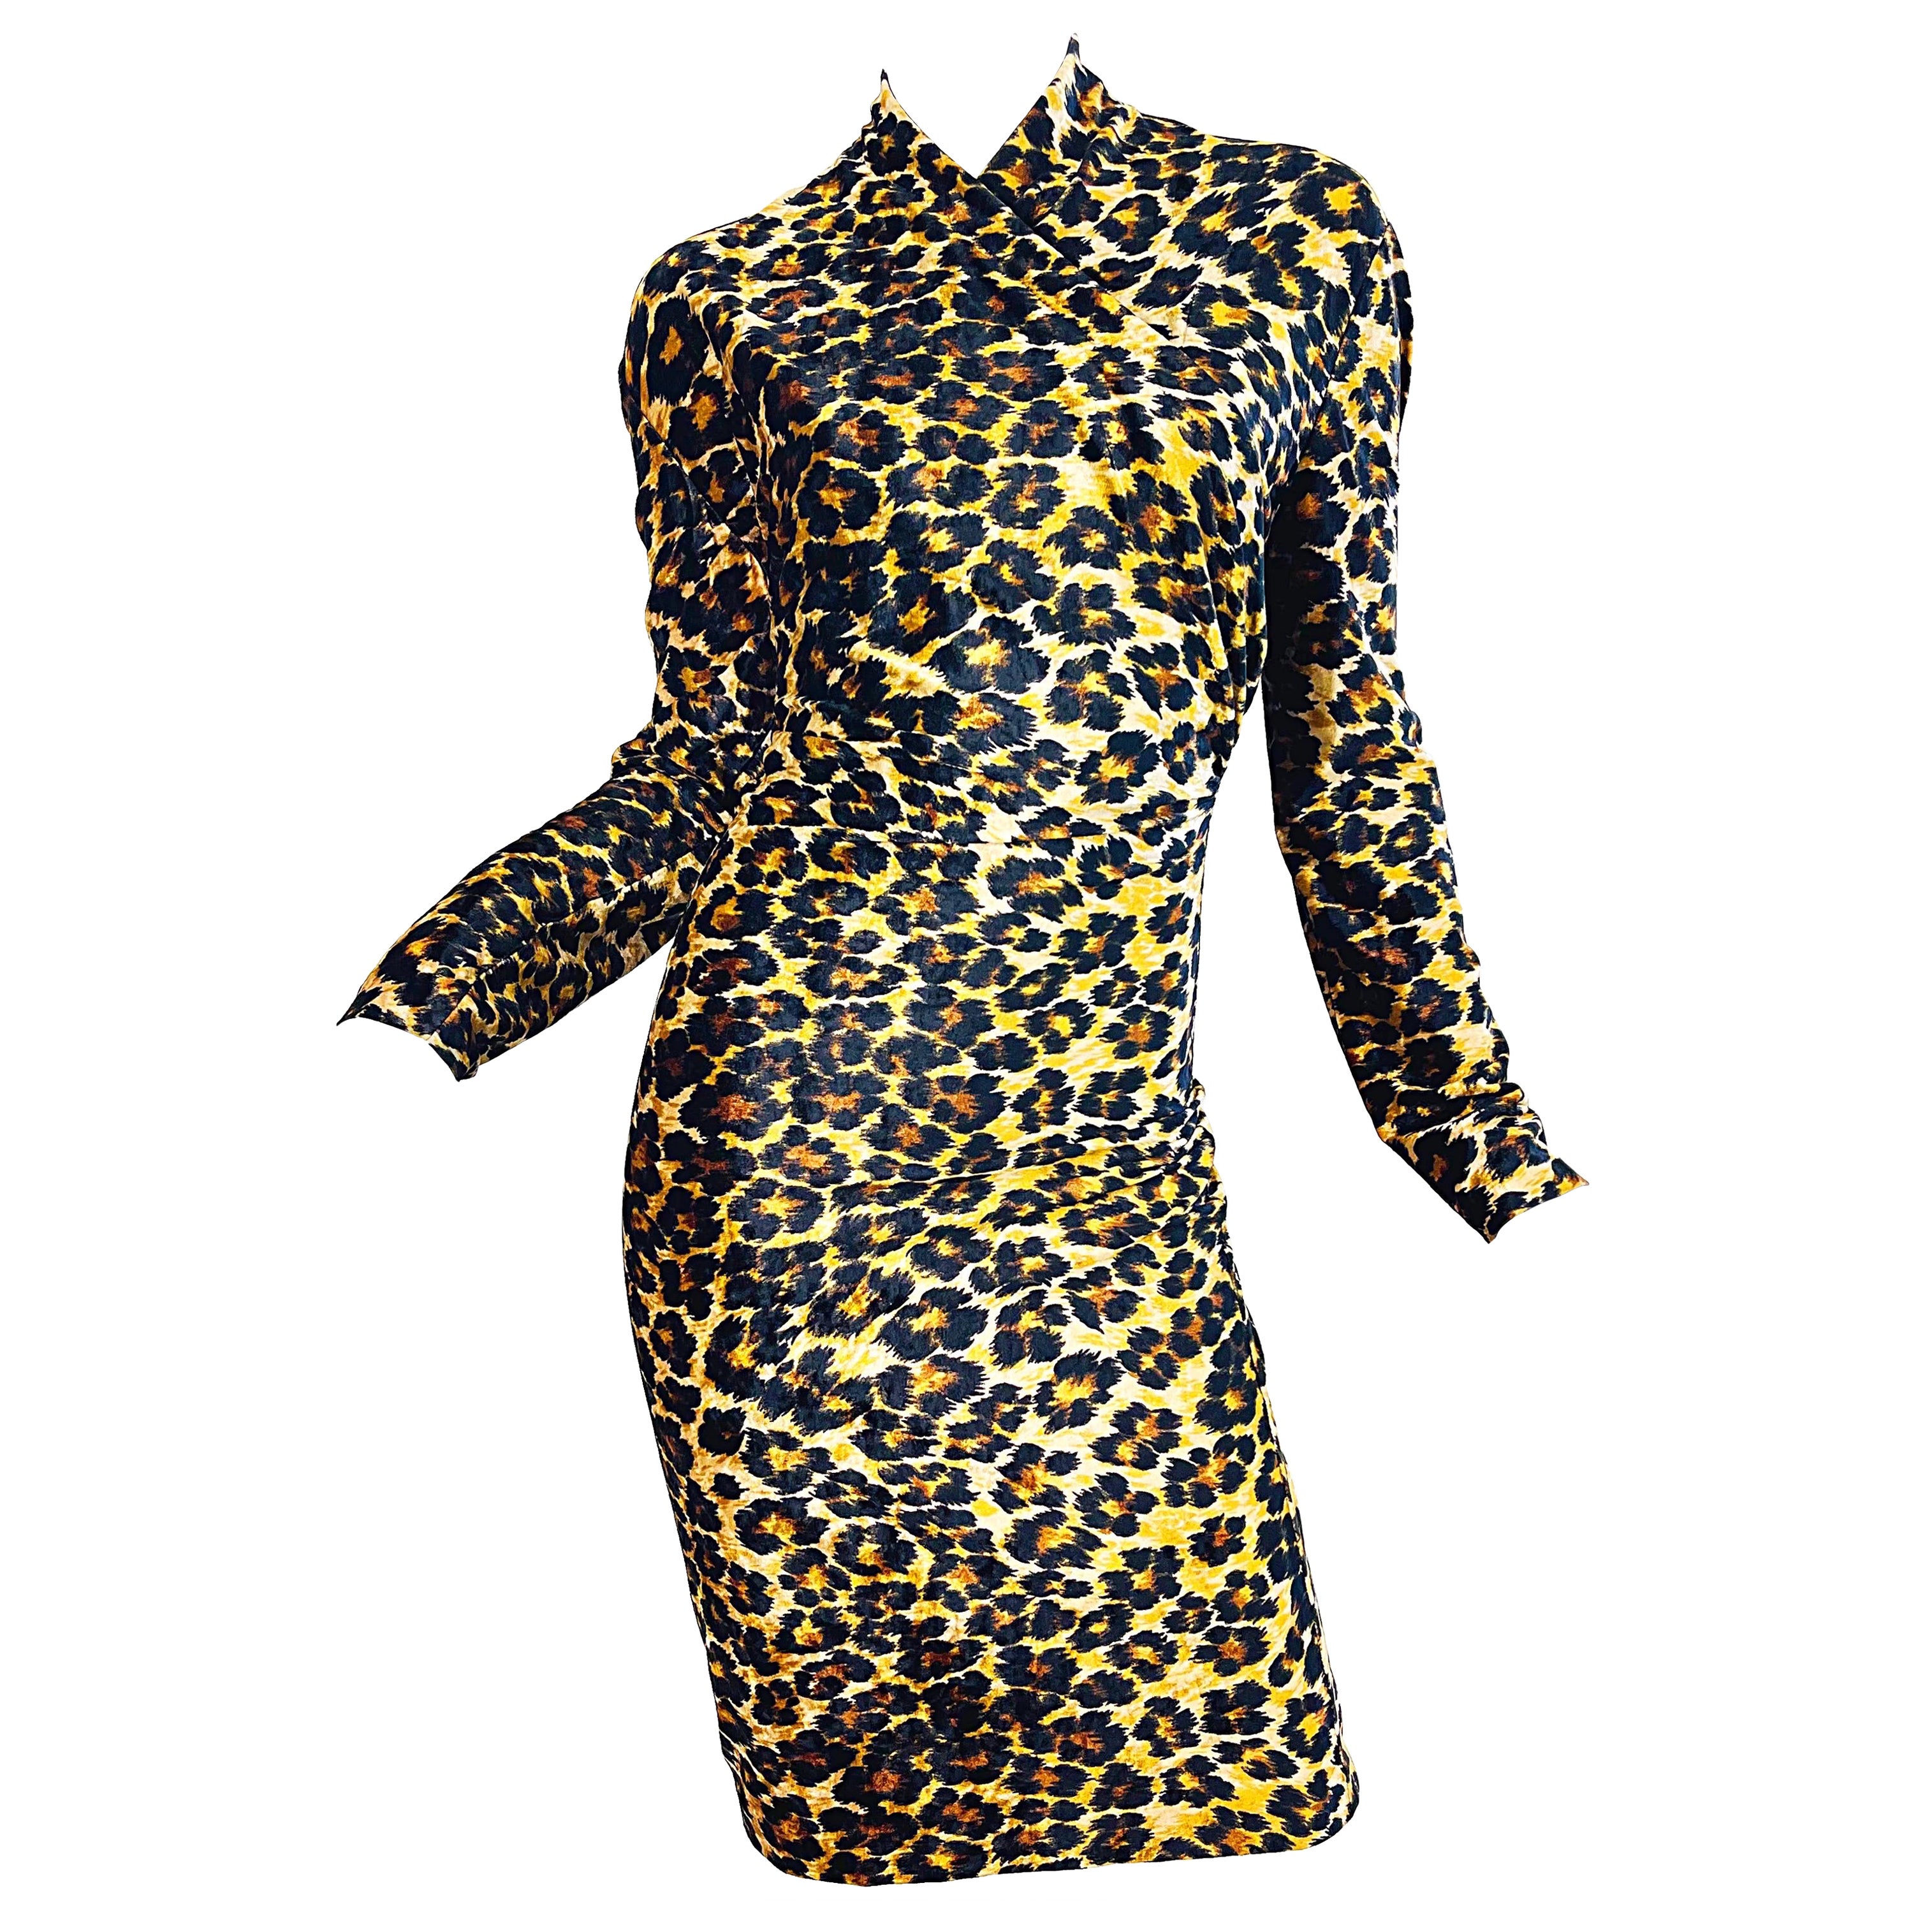 Documented Patrick Kelly 1989 Leopard Print Size Large Velour Vintage Dress 80s For Sale